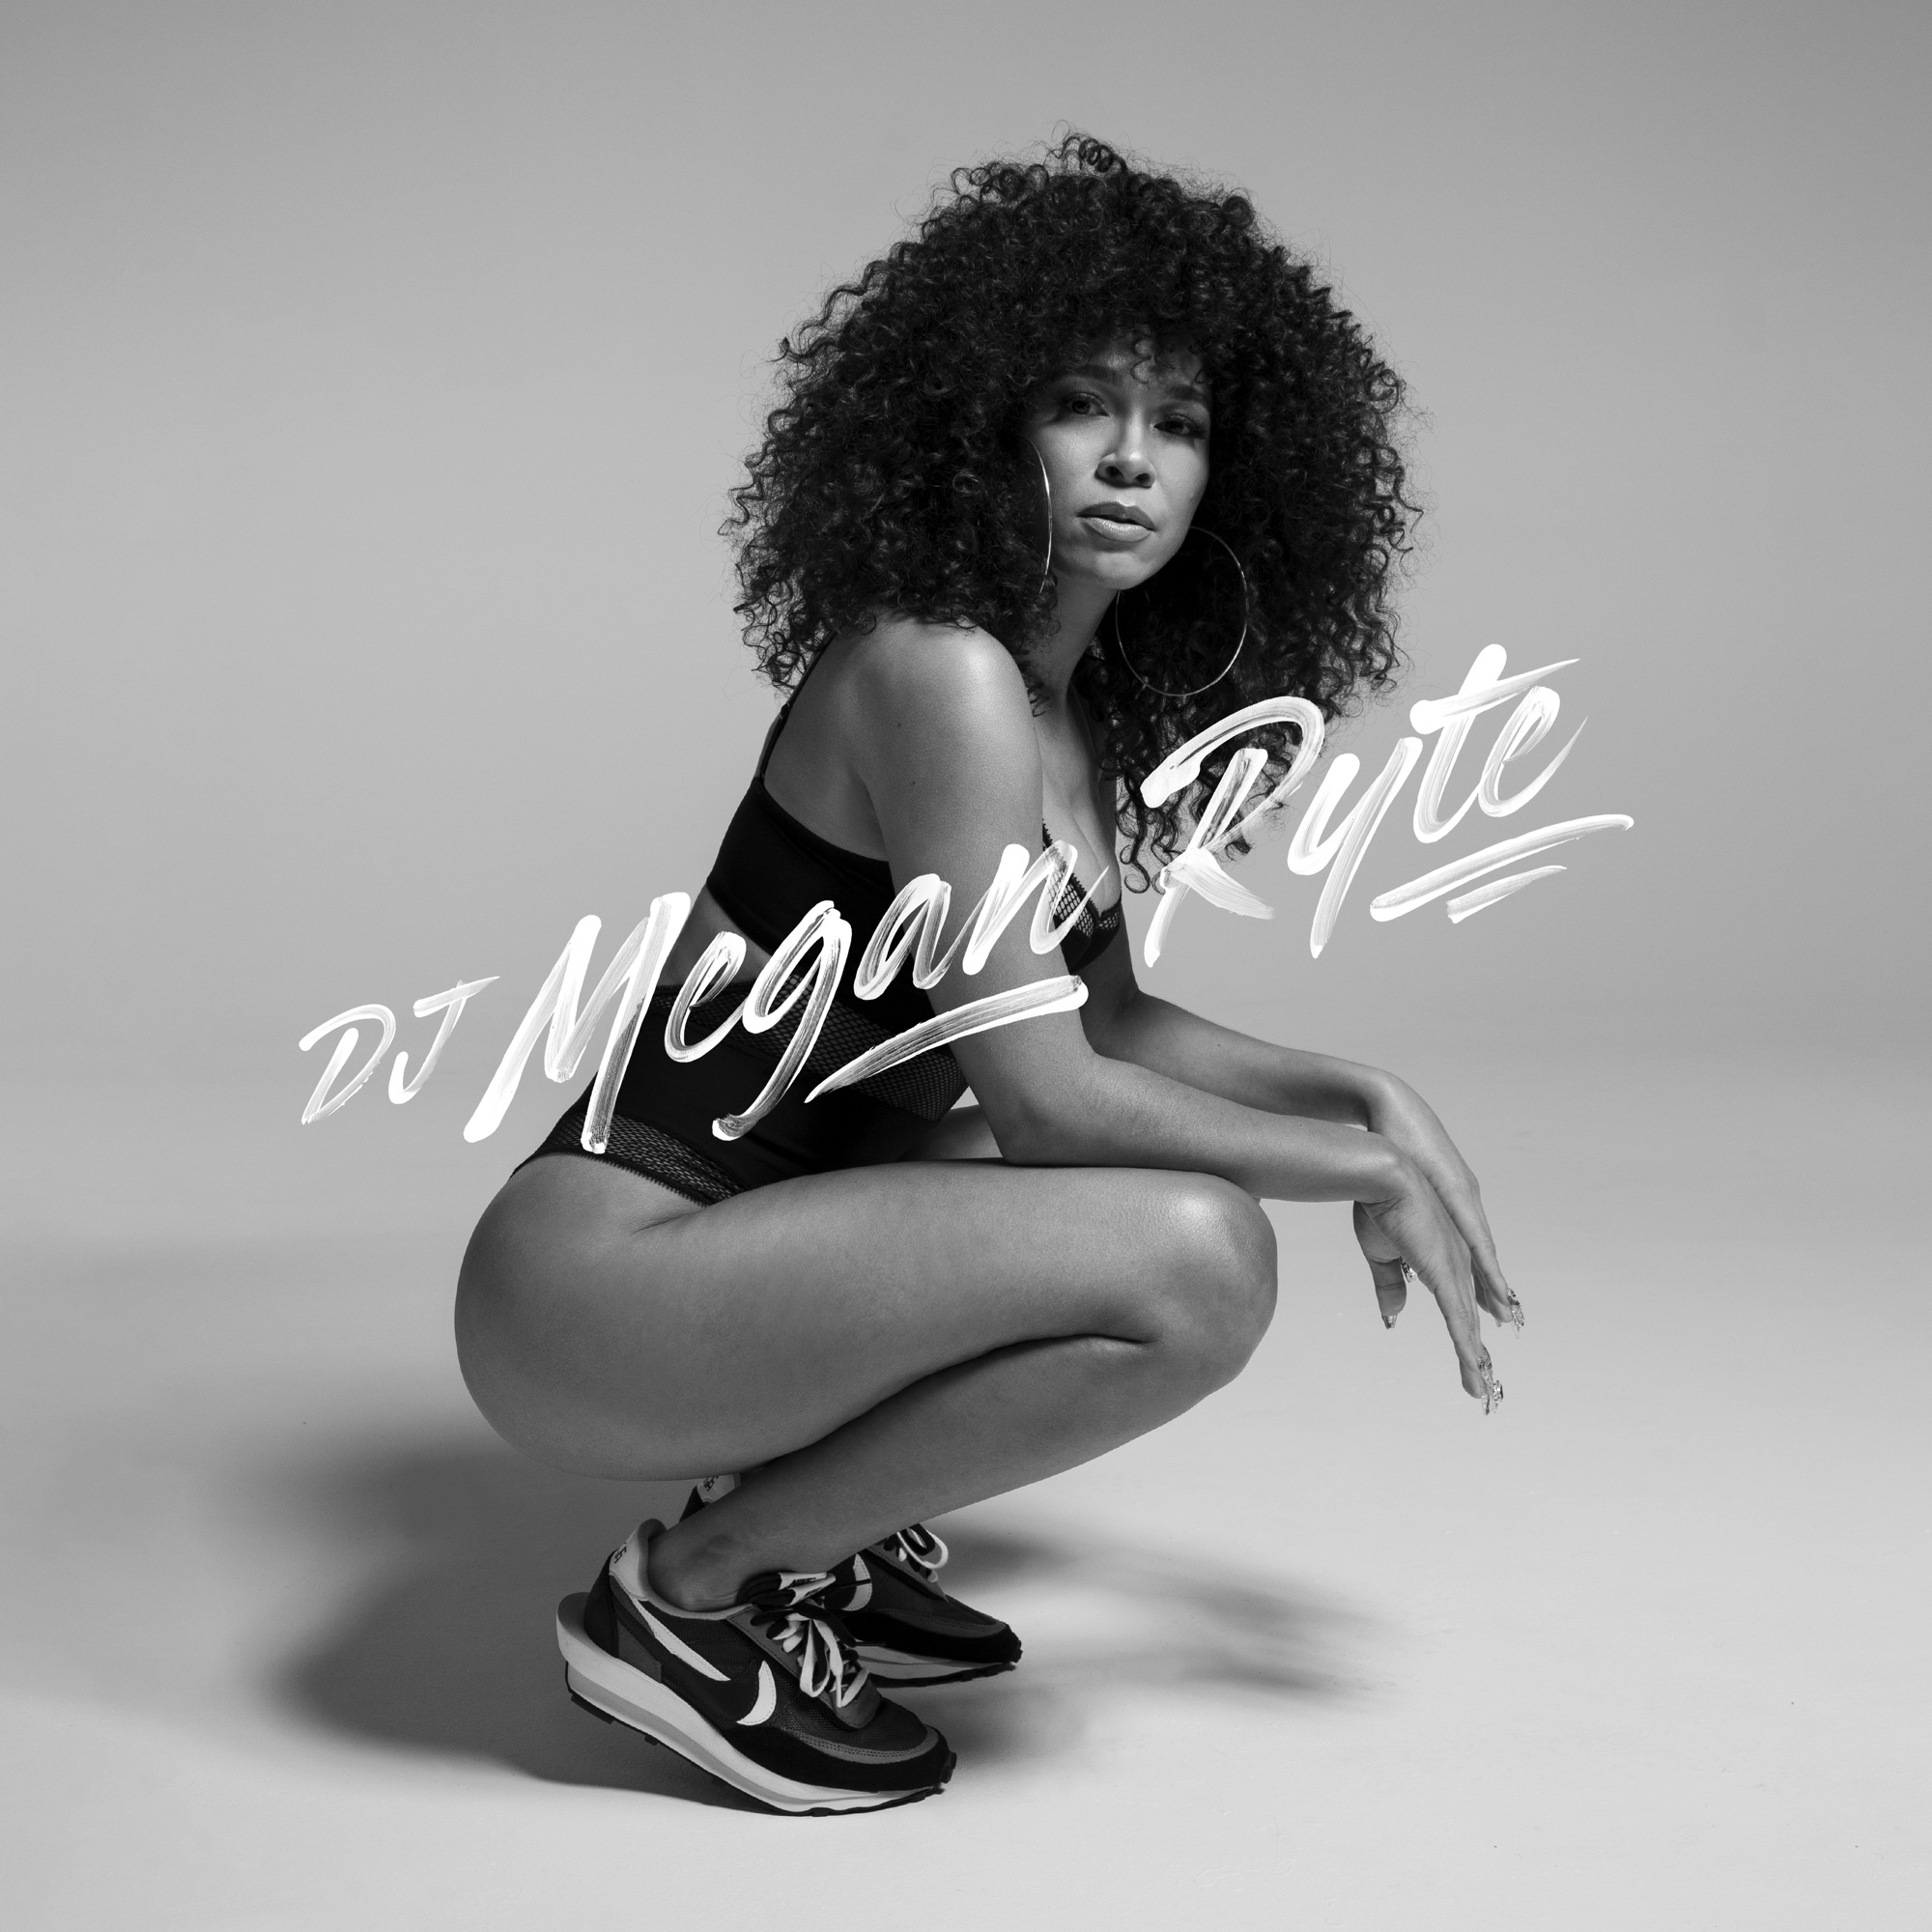 DJ Megan Ryte - DJ Megan Ryte